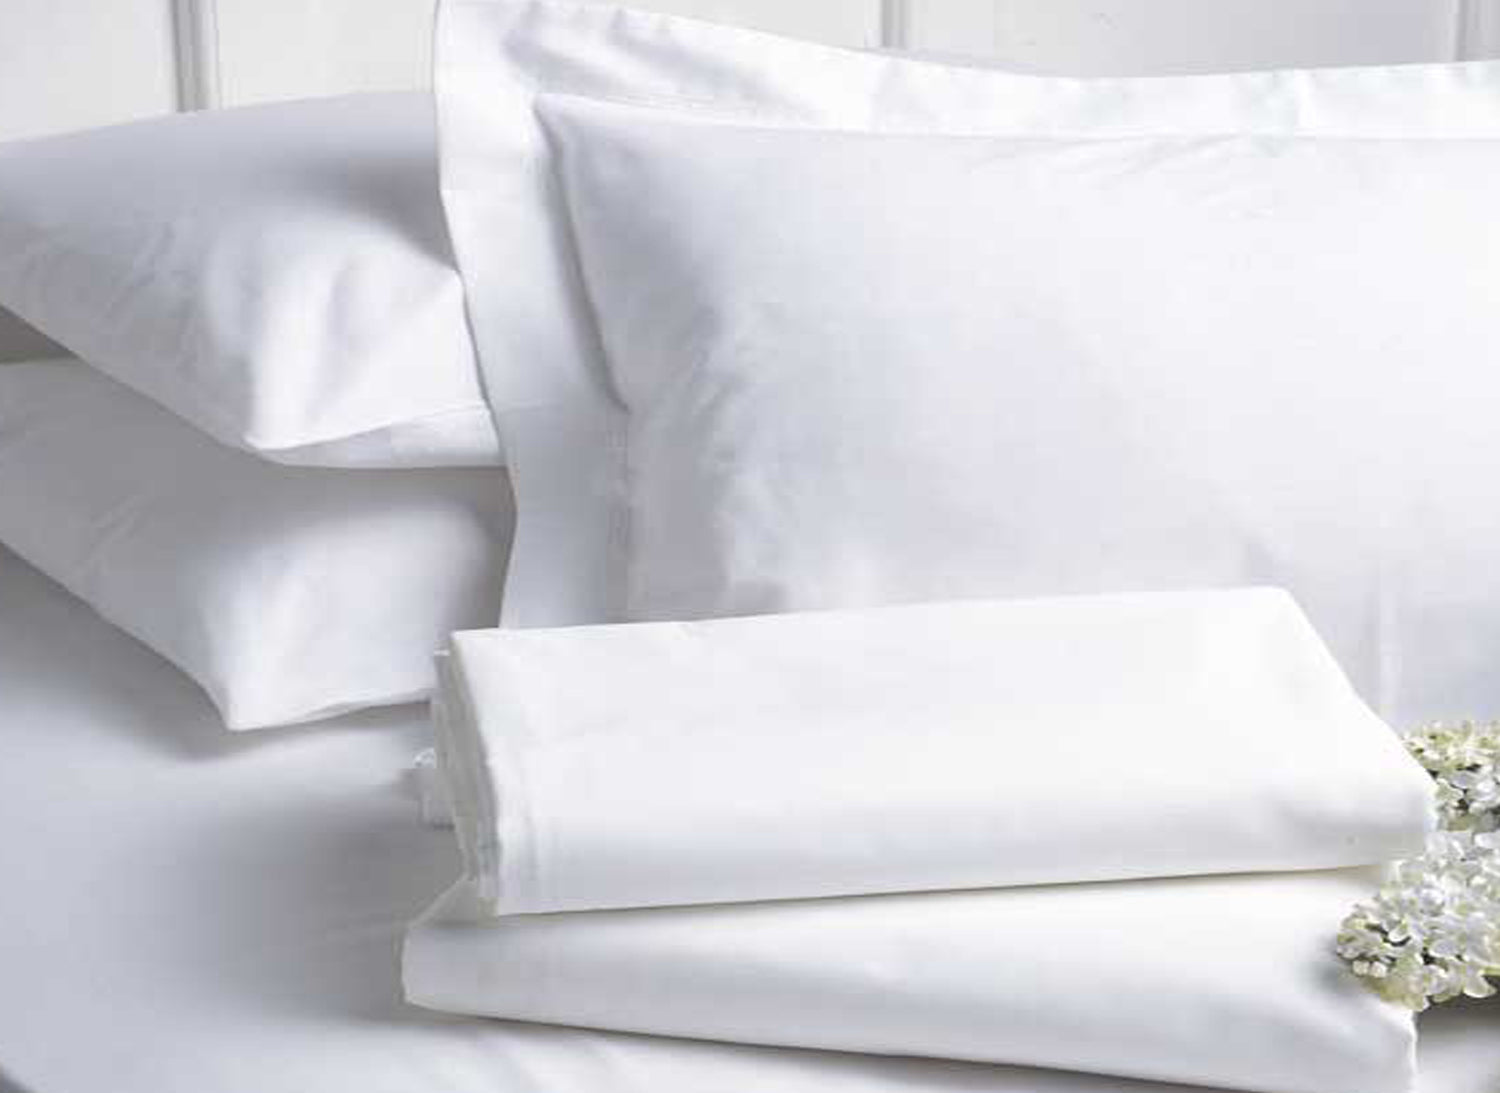 Luxury hotel pillow-case